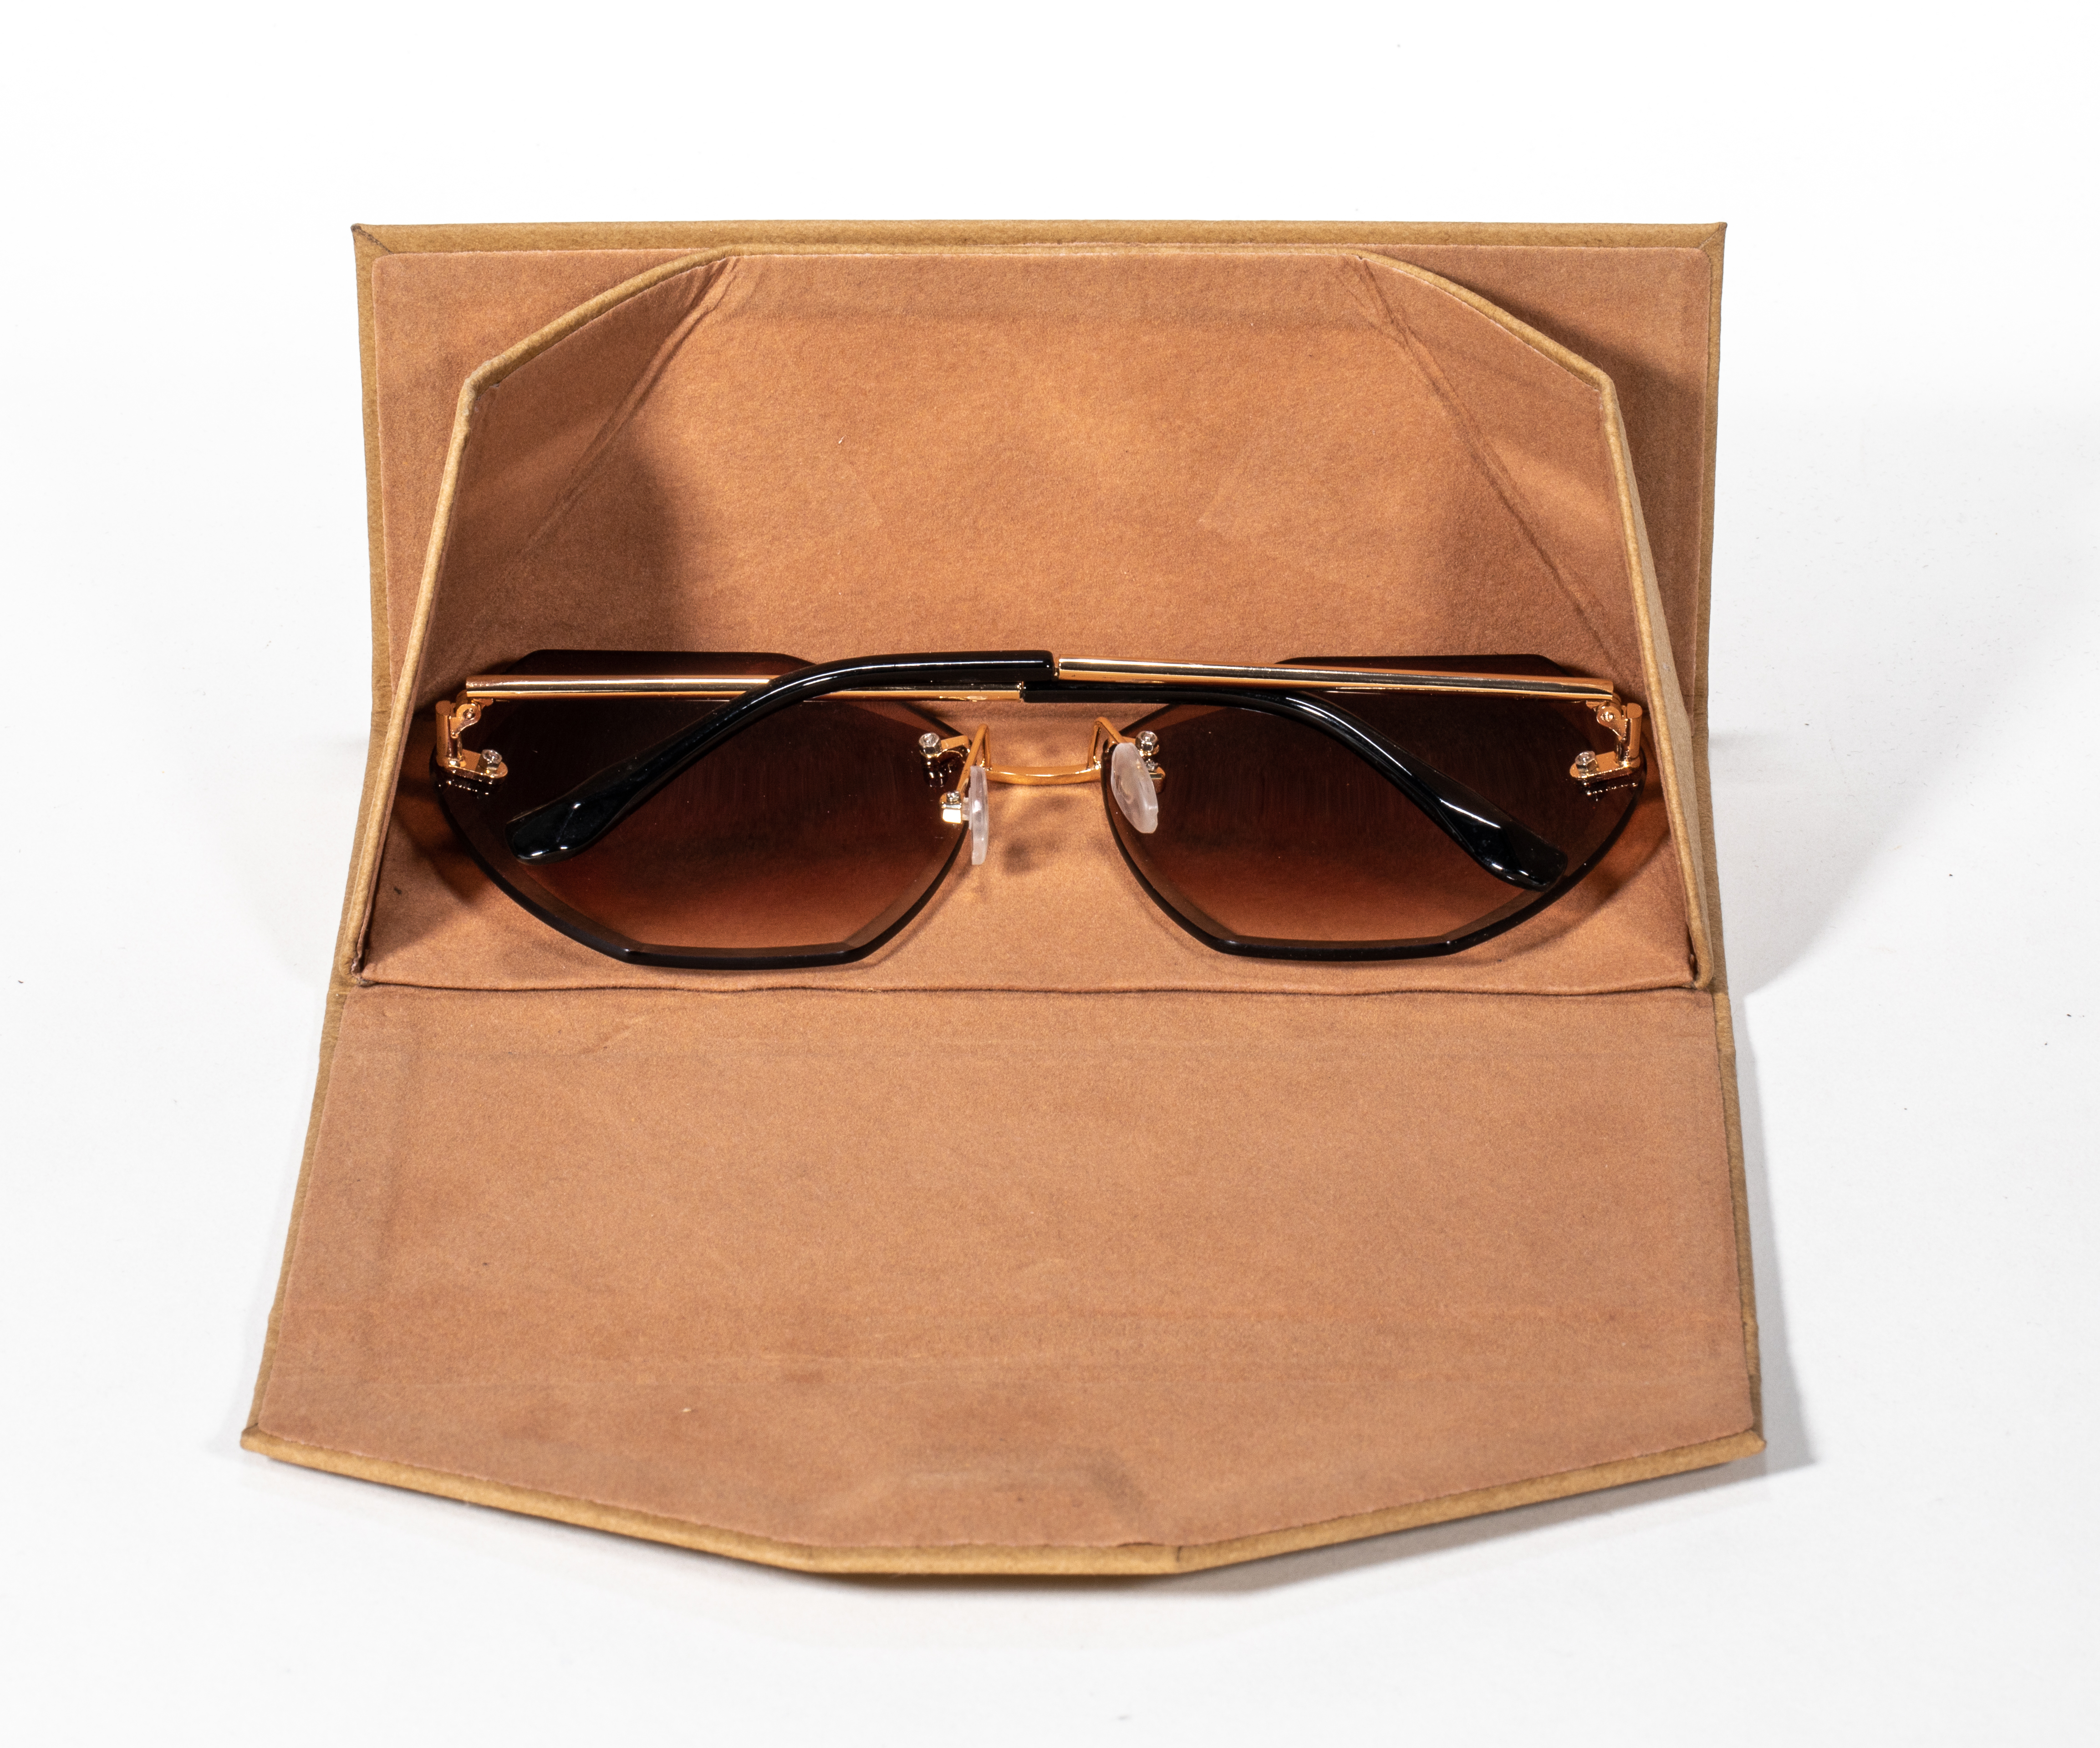 2021 Sunglasses, Triangular, Brown, Detachable Case